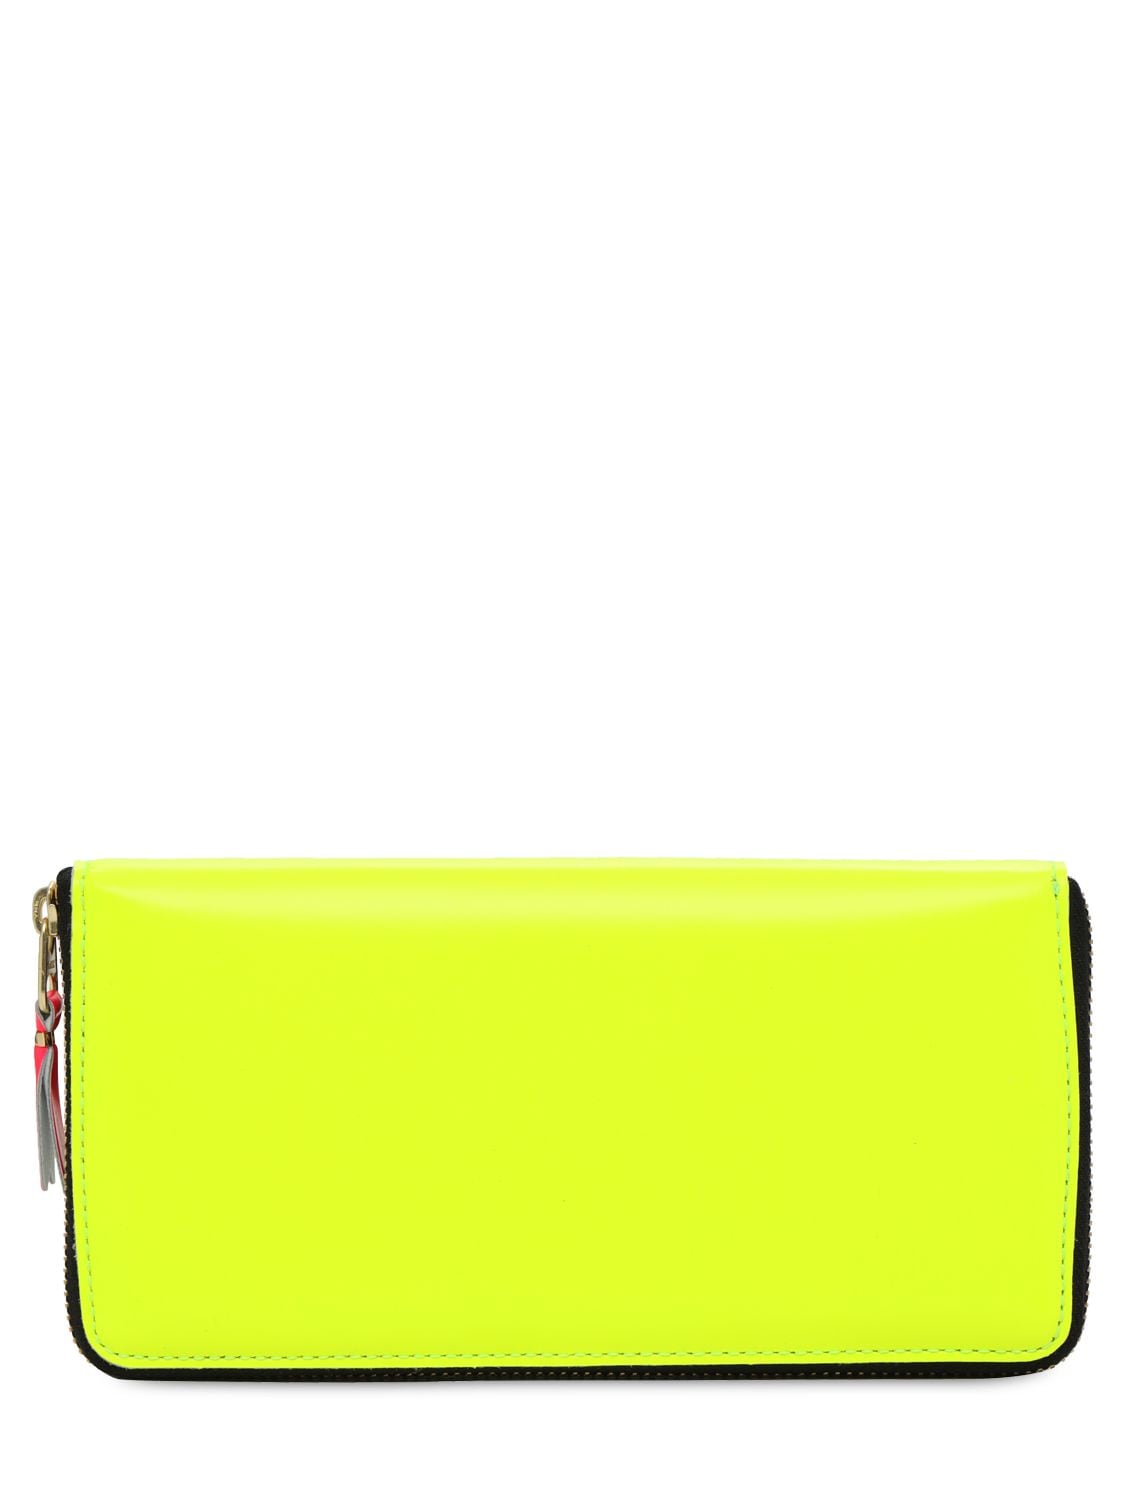 Comme Des Garçons Super Fluo Leather Zip Around Wallet In Yellow